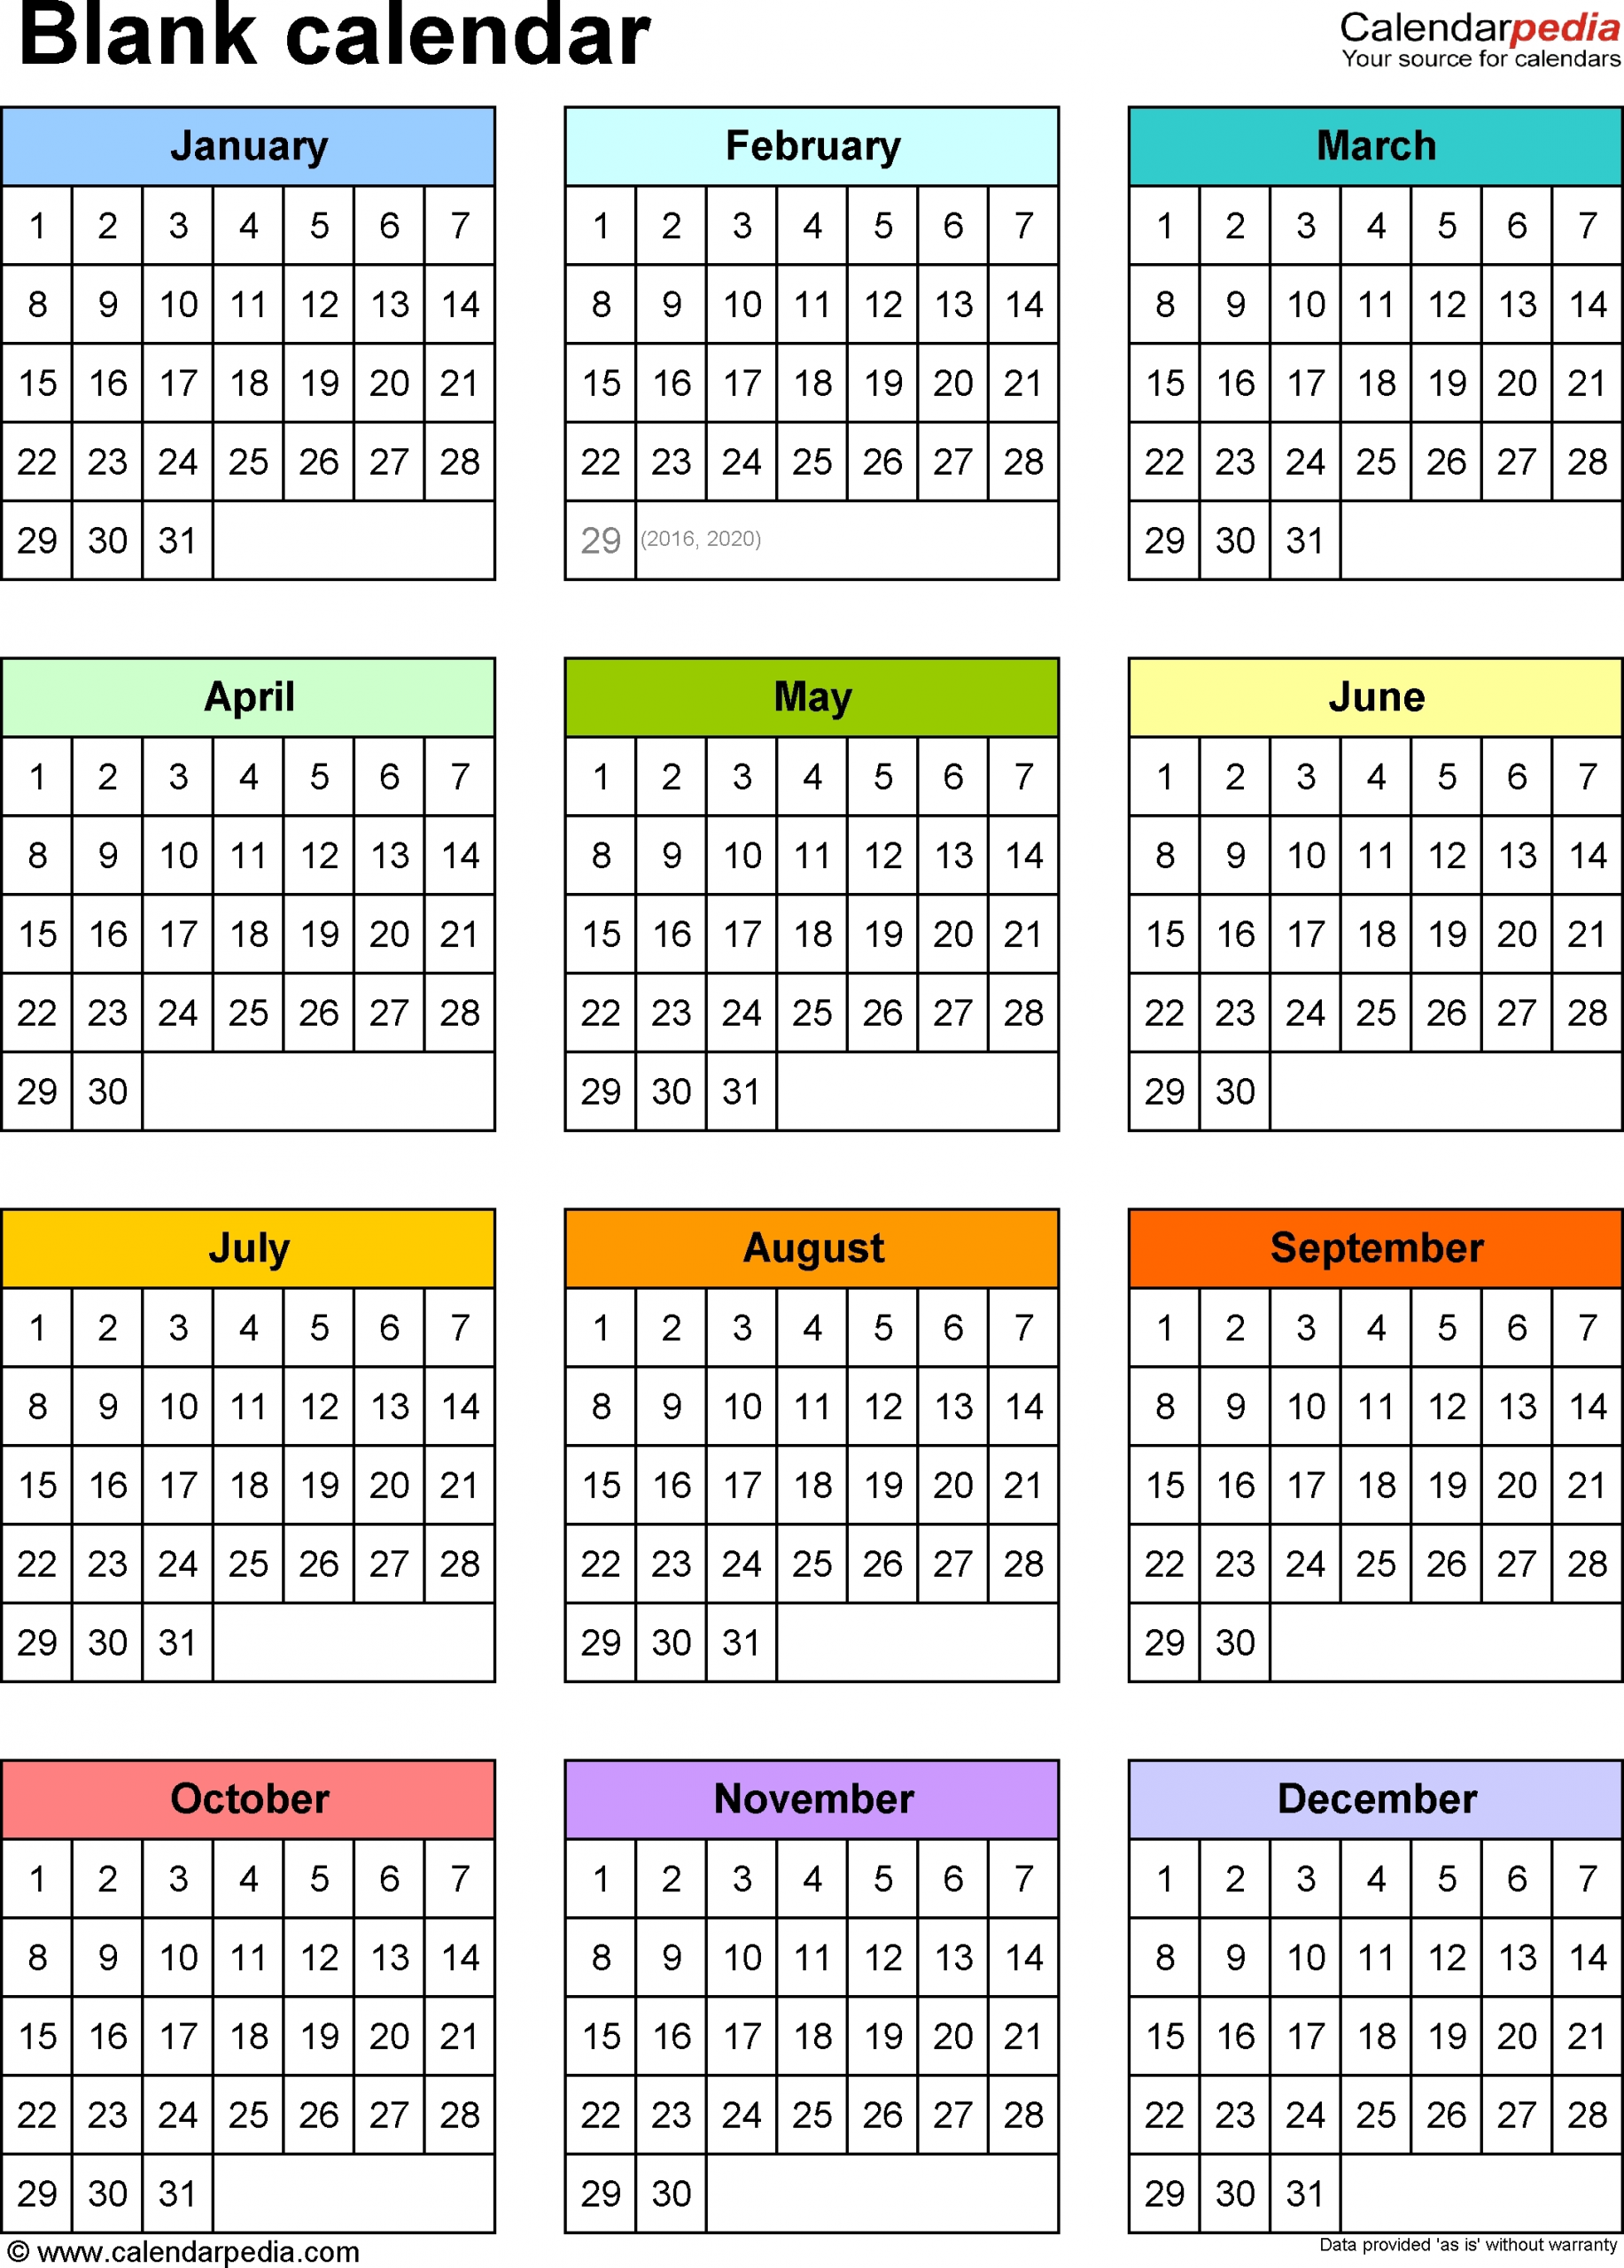 calendar template year at a glance calendar inspiration